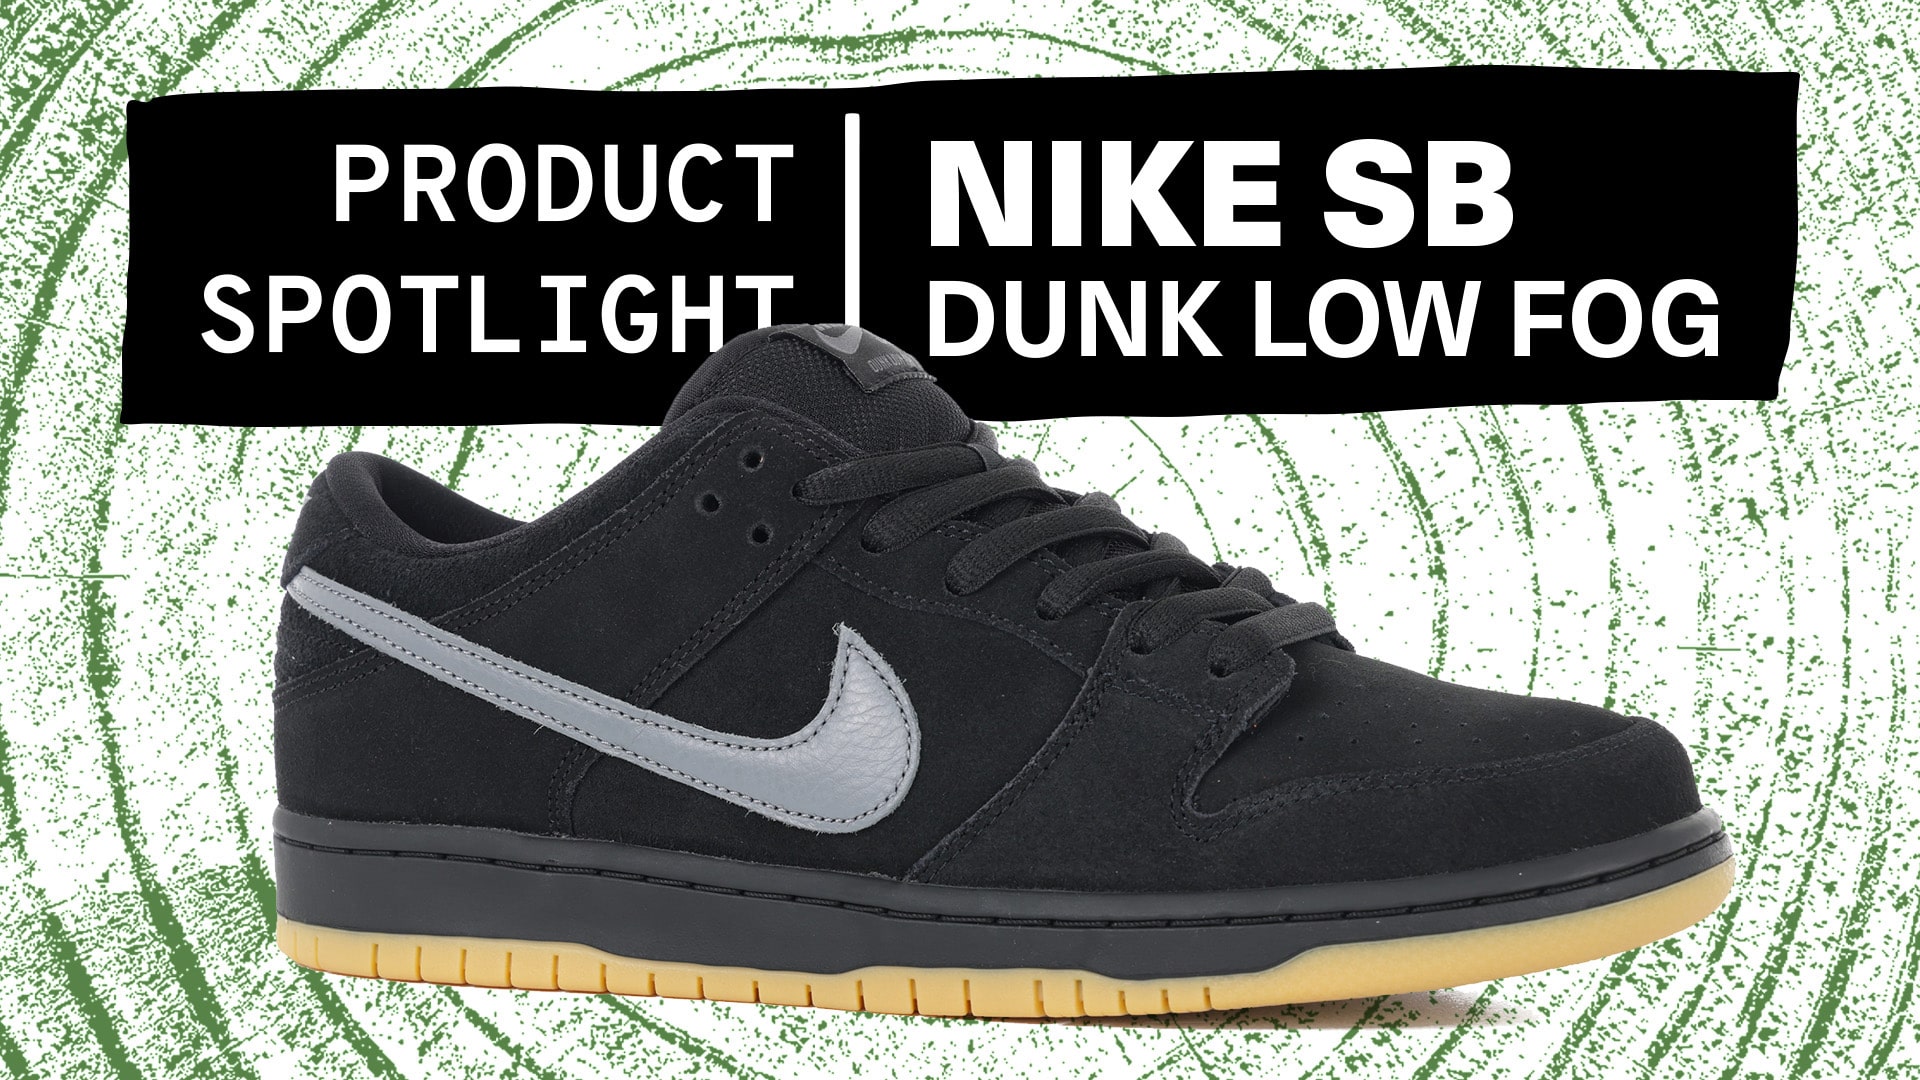 Nike SB Dunk Low Fog | Product Spotlight | Tactics